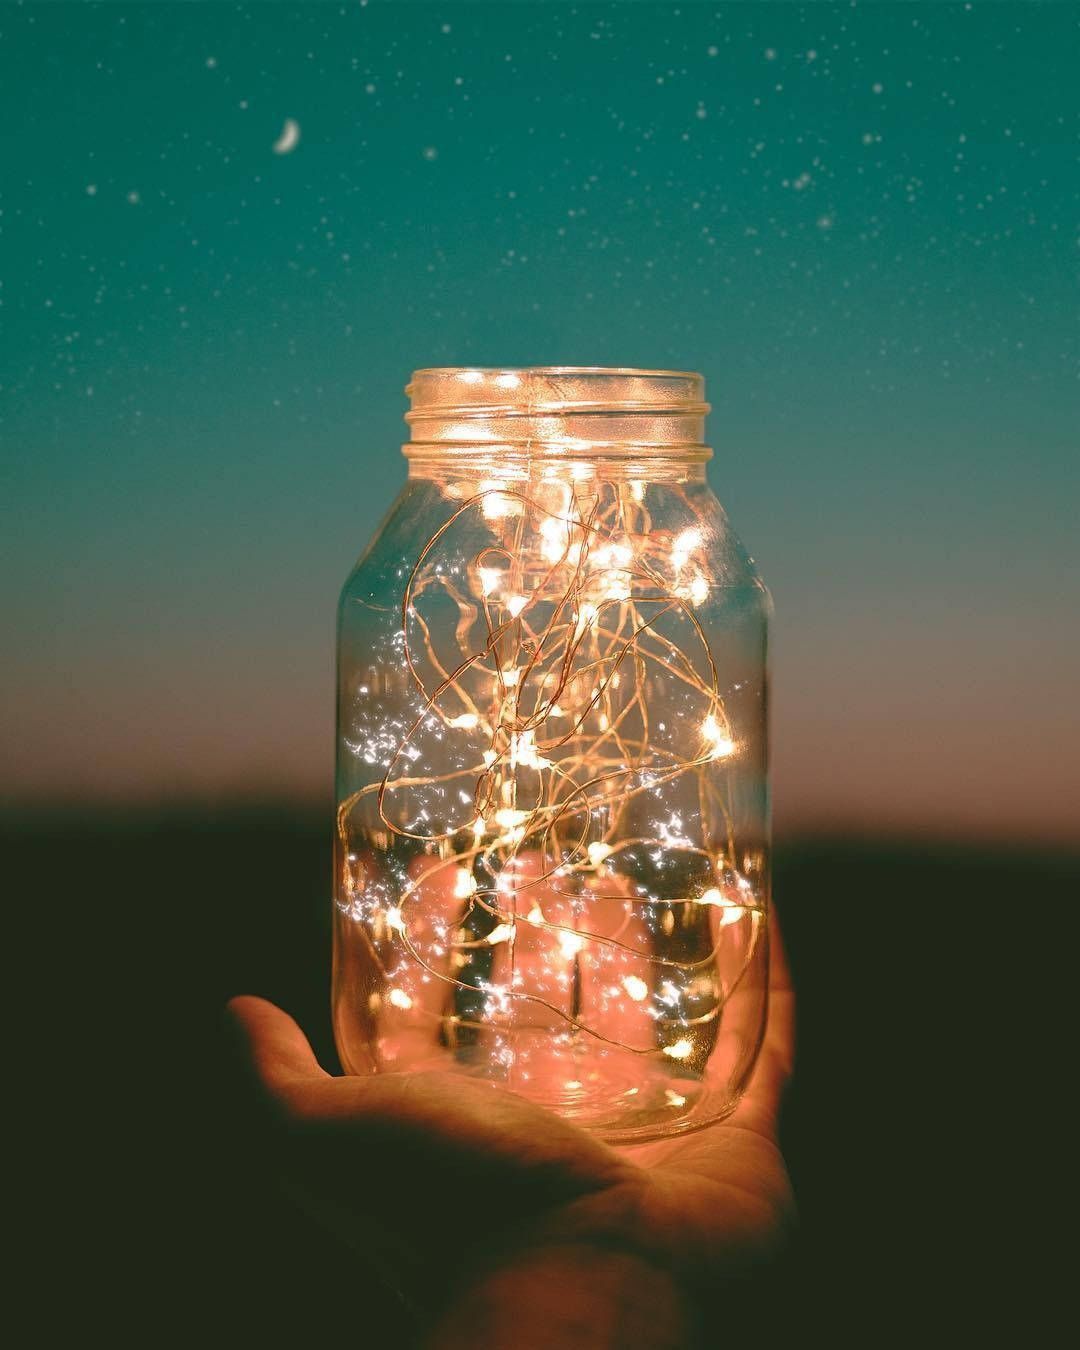 A hand holding a jar with lights inside. - Fairy lights